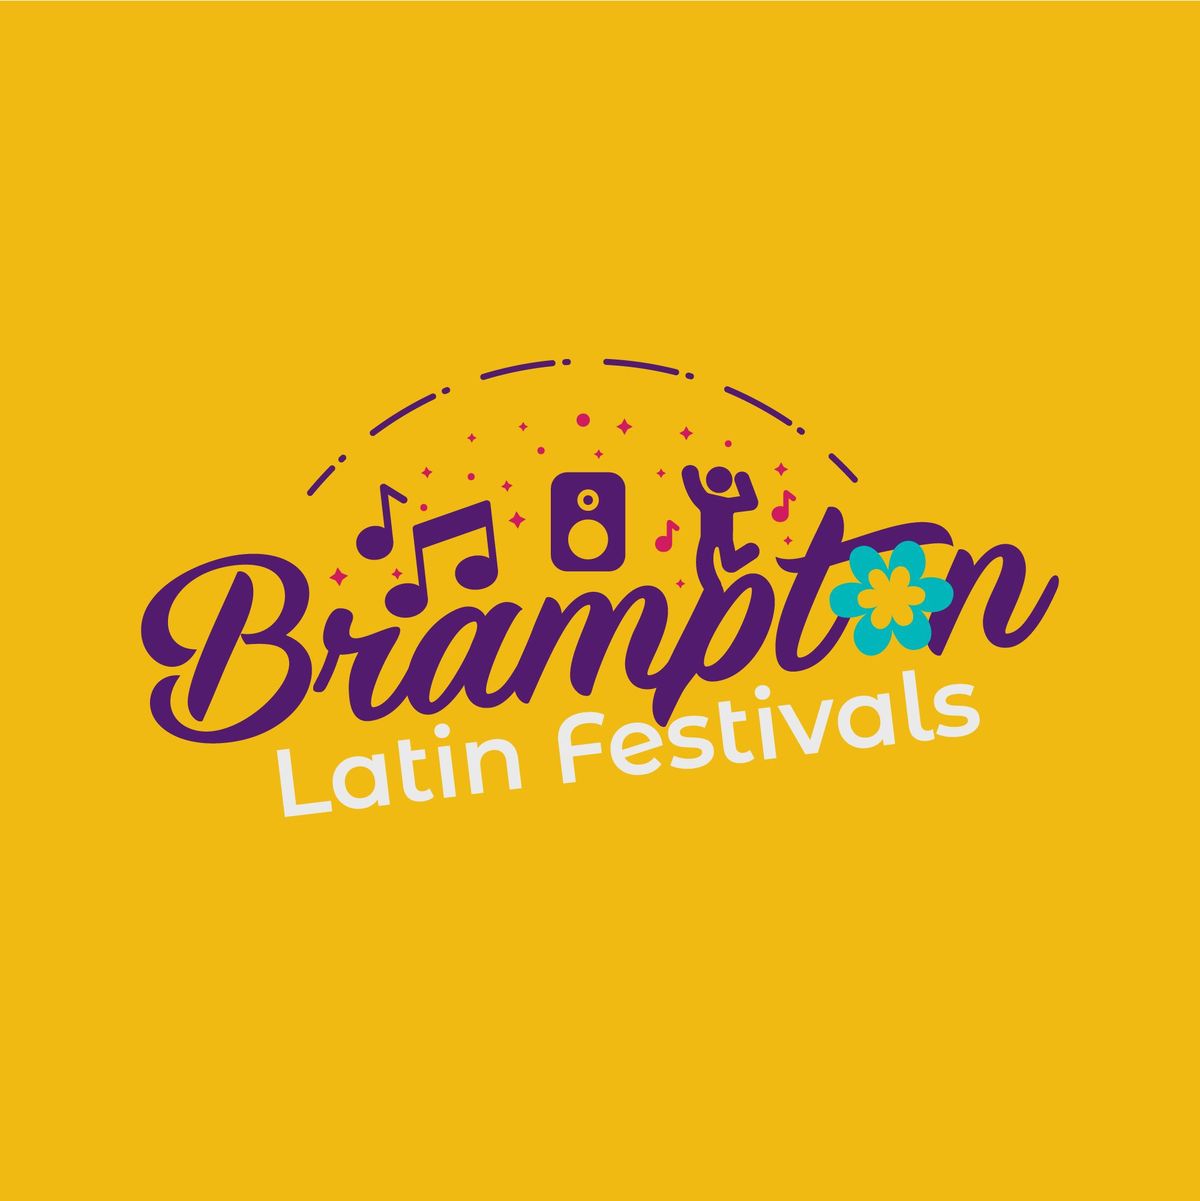 Brampton Latin festivals